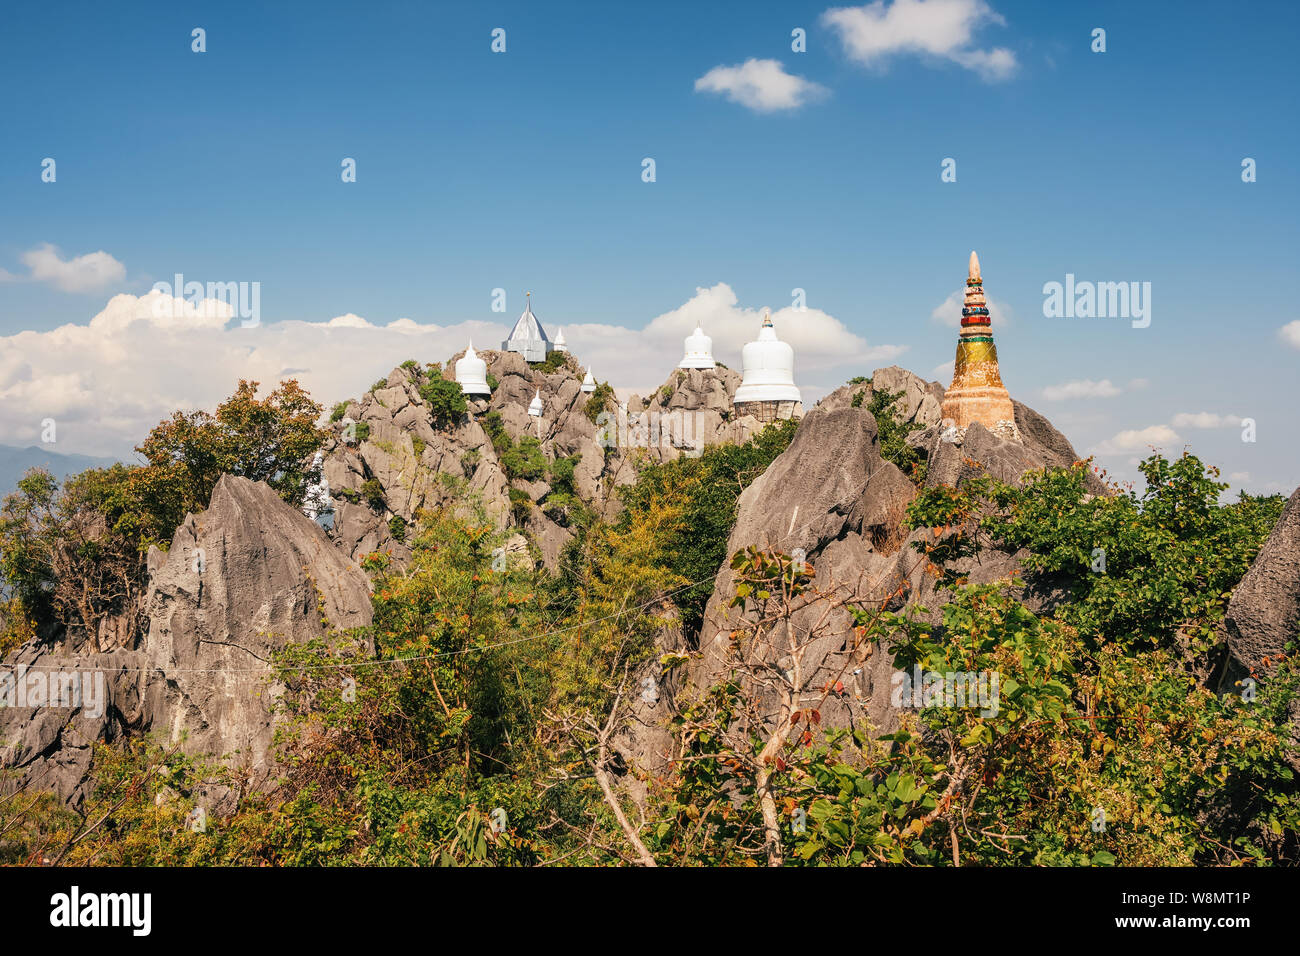 Wat Chaloem Phra Kiat Phrachomklao Rachanusorn Tempel auf dem Hügel in Lampang, Thailand Stockfoto